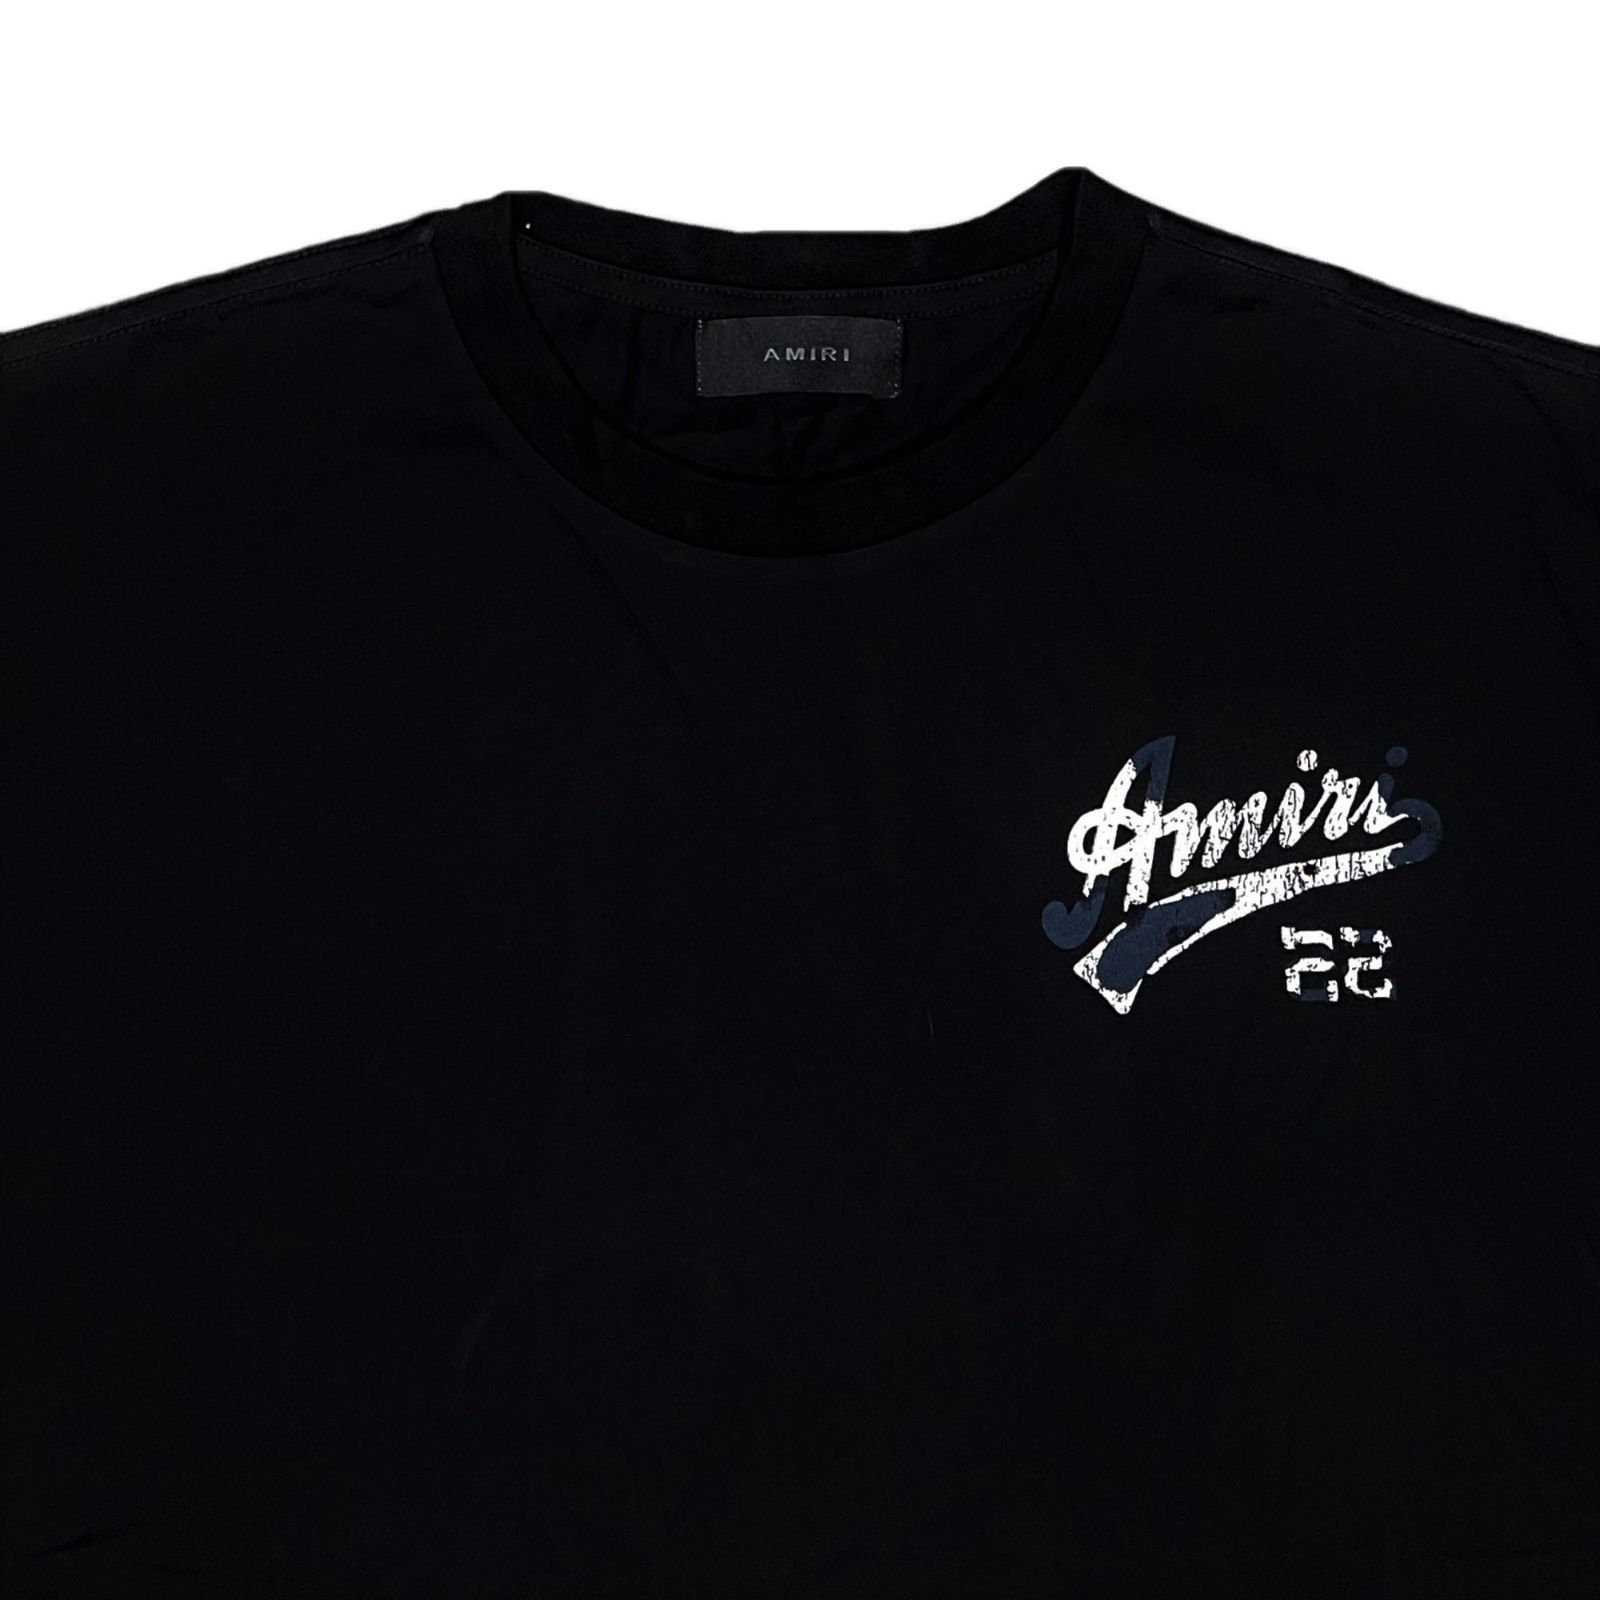 AMIRI アミリ 22 JERSEY Tシャツ ブラック - メルカリ